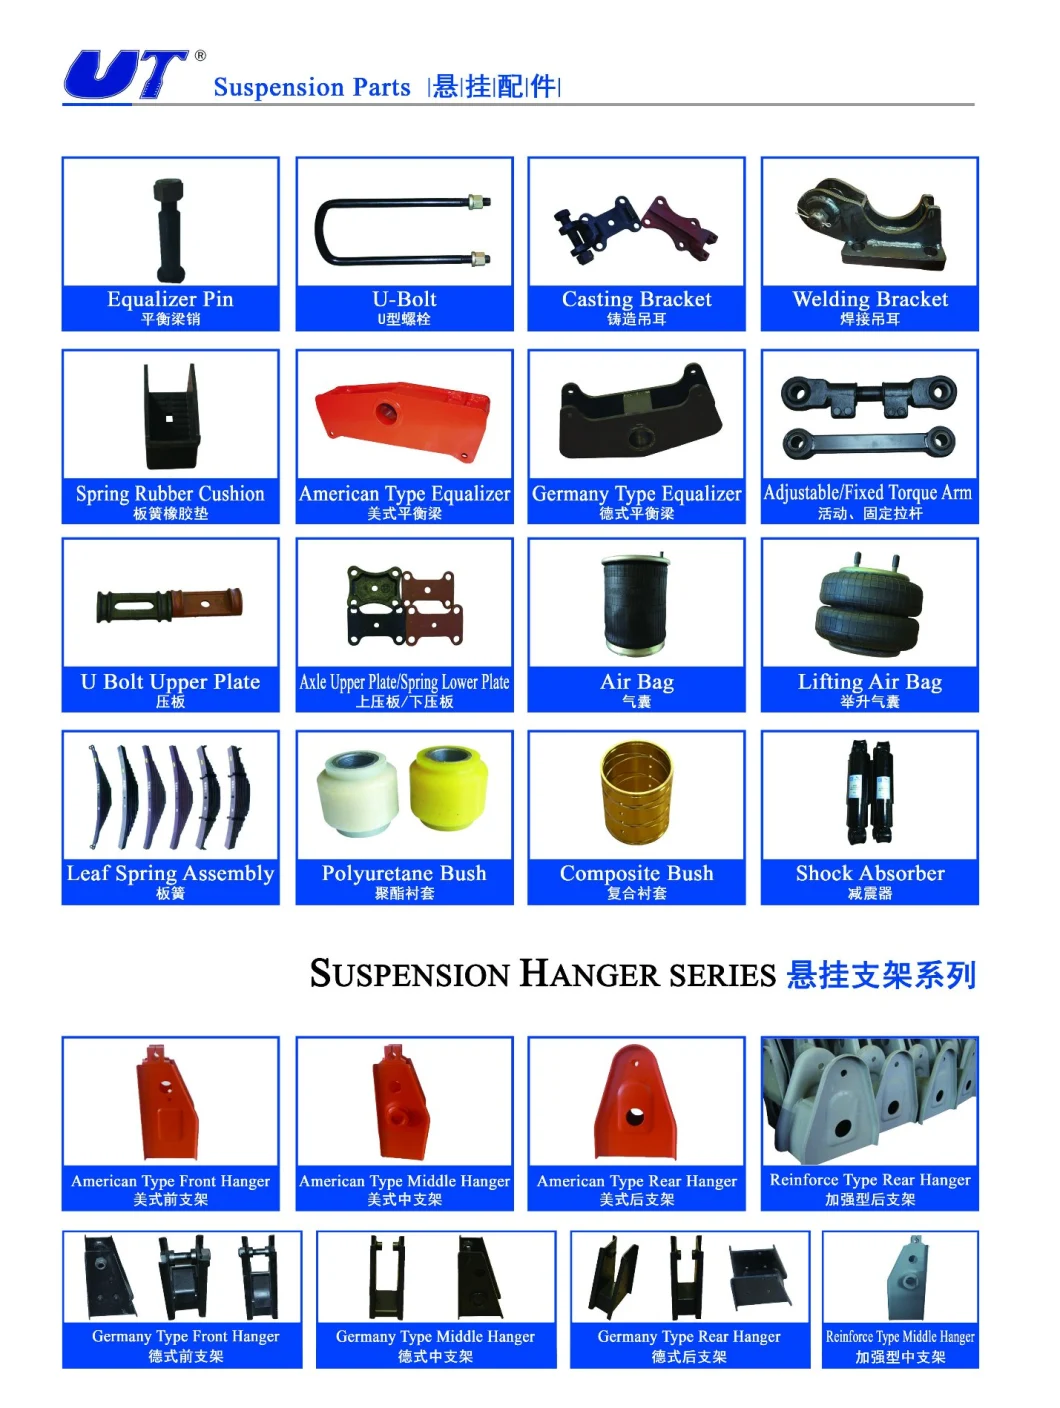 Germany Suspension Spare Parts/American Suspension Spare Parts/Suspension Spare Parts